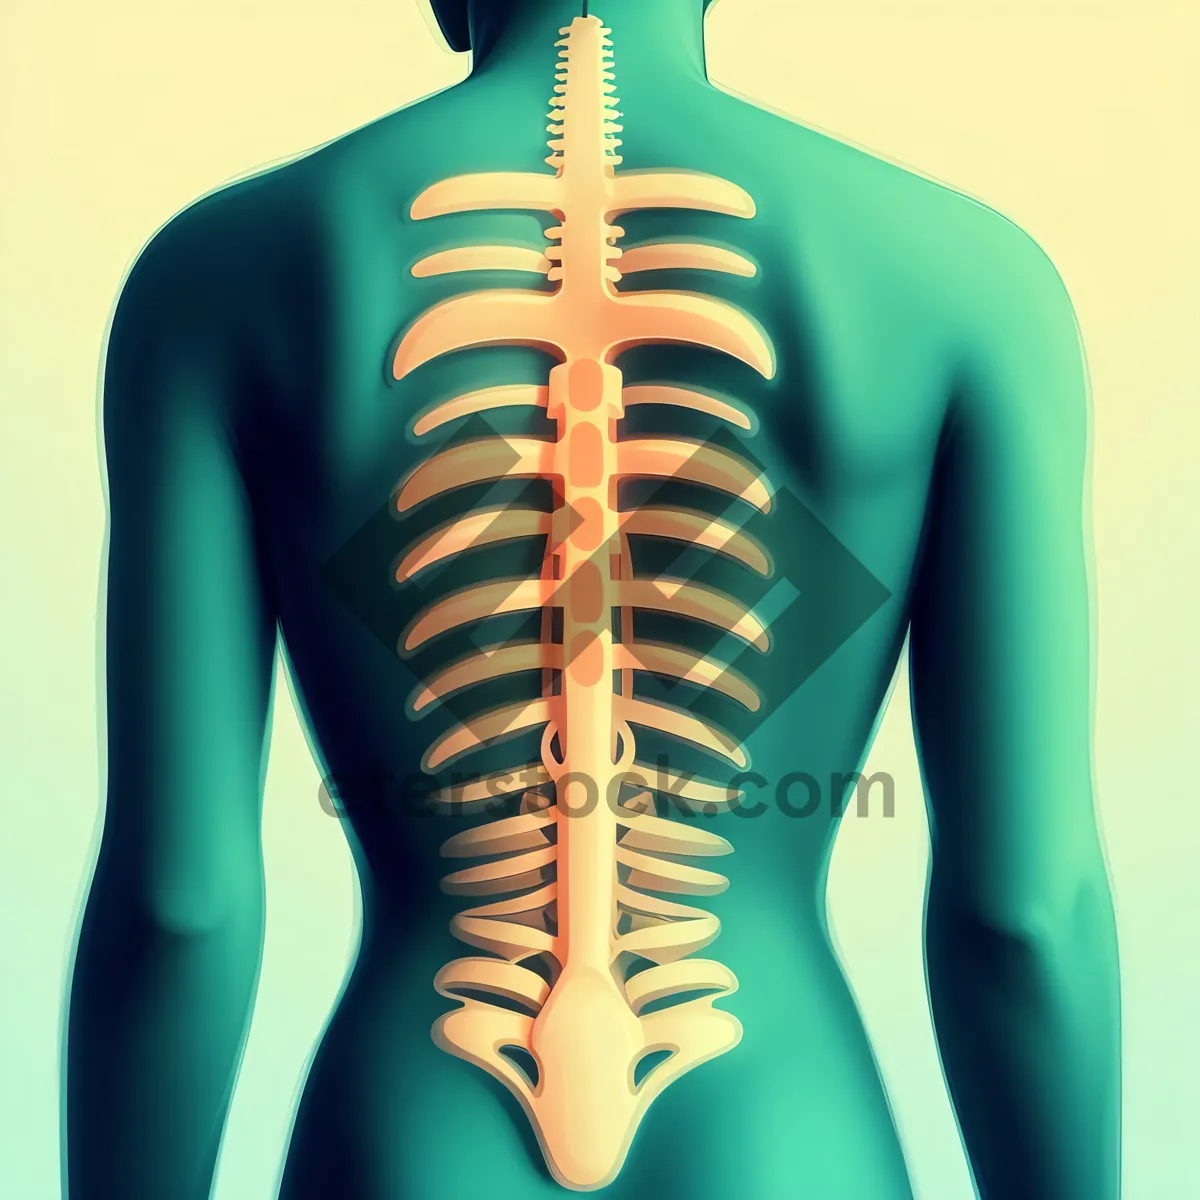 Picture of Anatomical Human Torso with Spinal Bones - Medical 3D Illustration